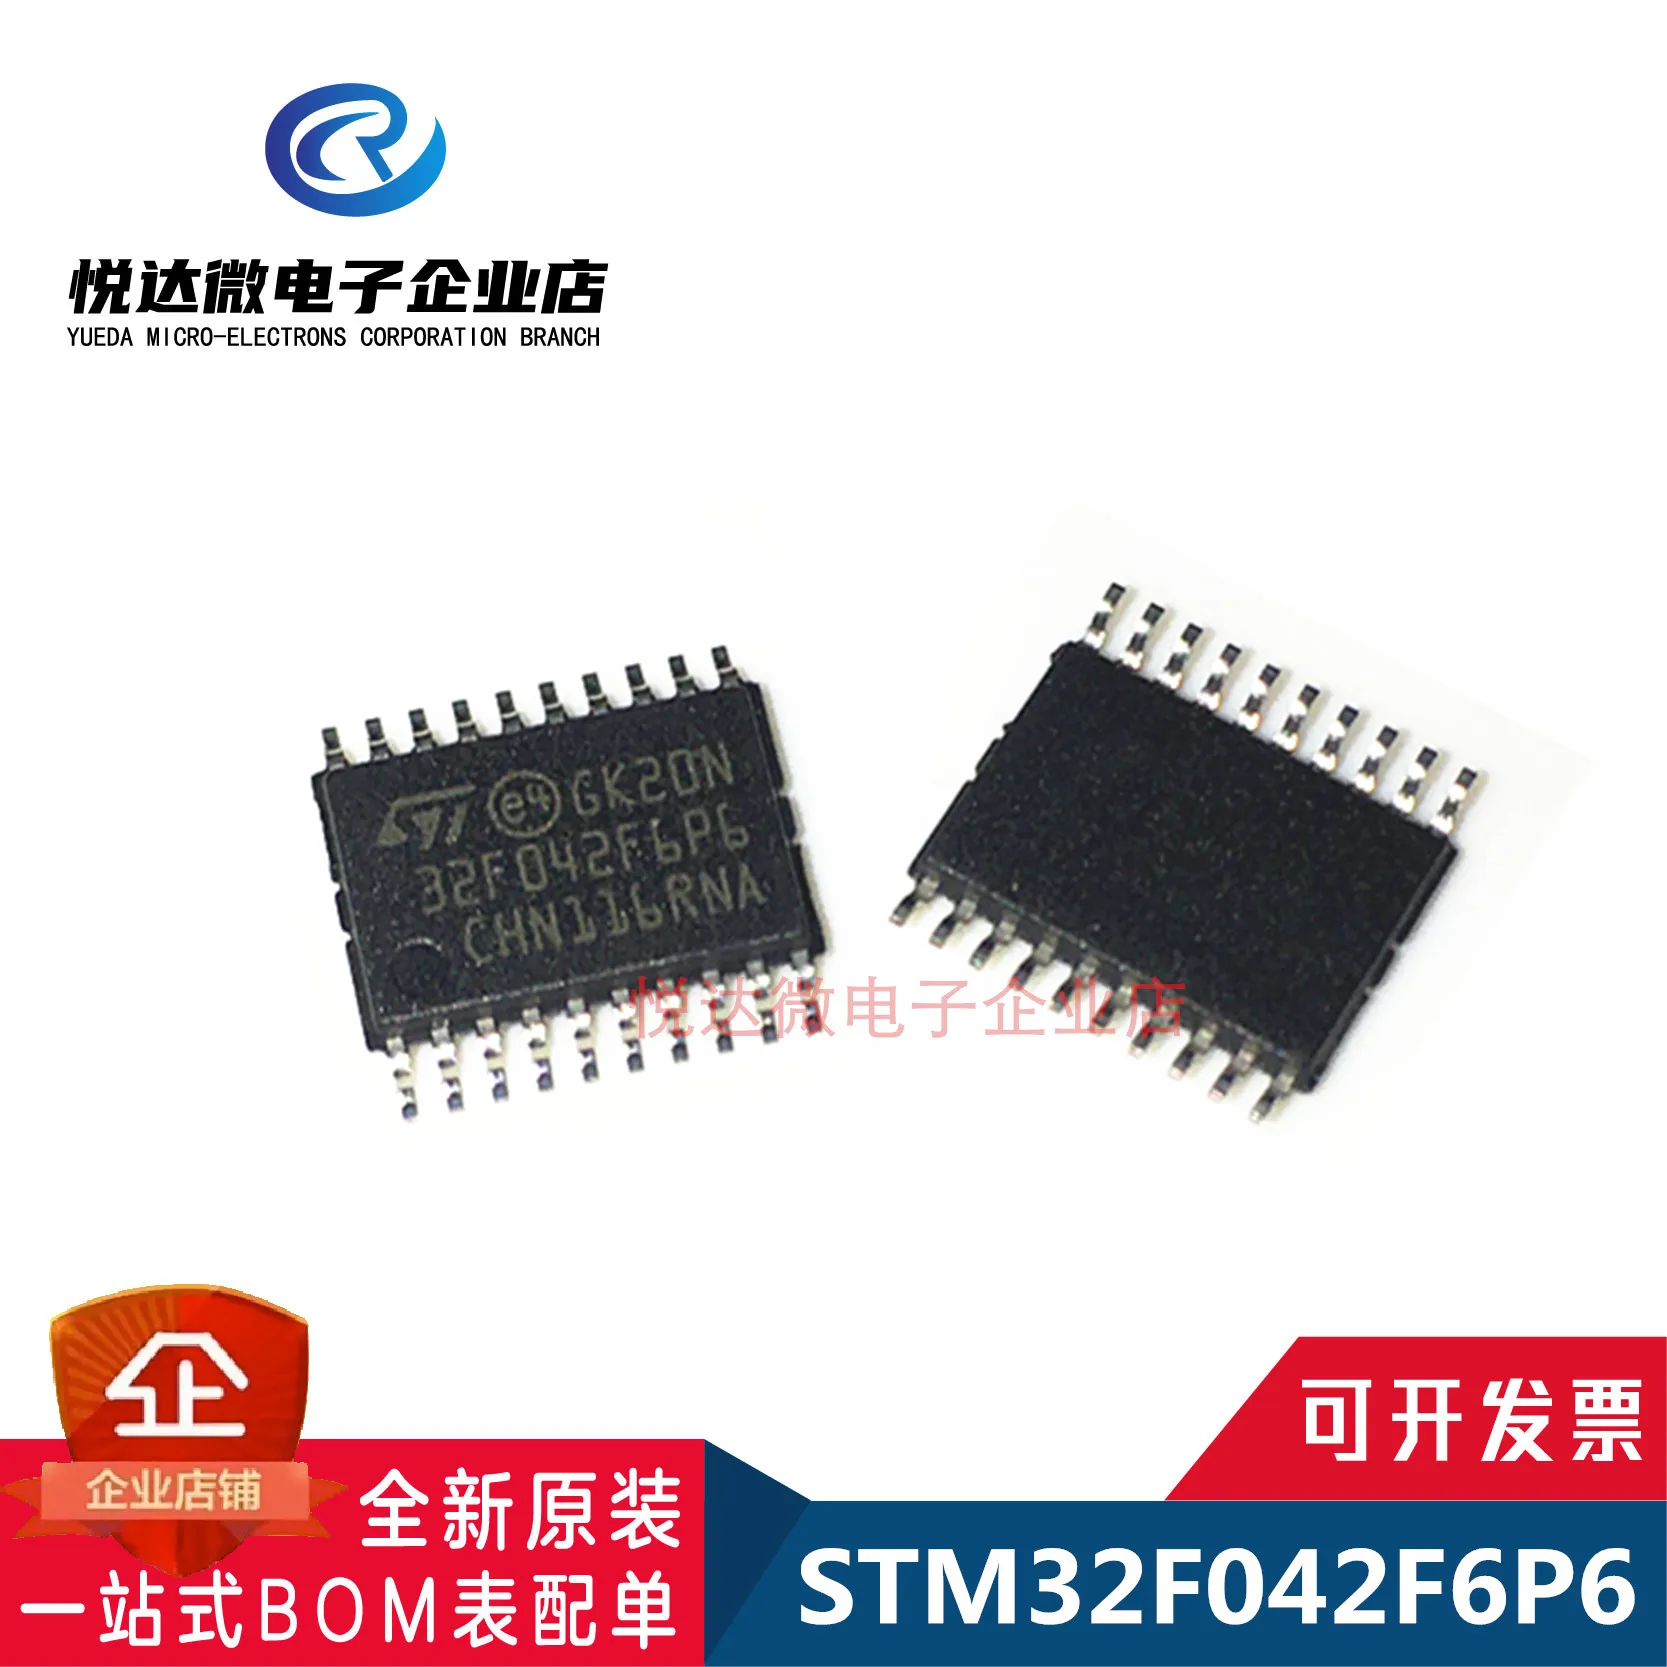 

STM32F042F6P6 TSSOP-20 STM32F042 STM32 F042F6P6 TSSOP20 Cortex-M0 32-bit Microcontroller MCU IC Controller Chip New Original